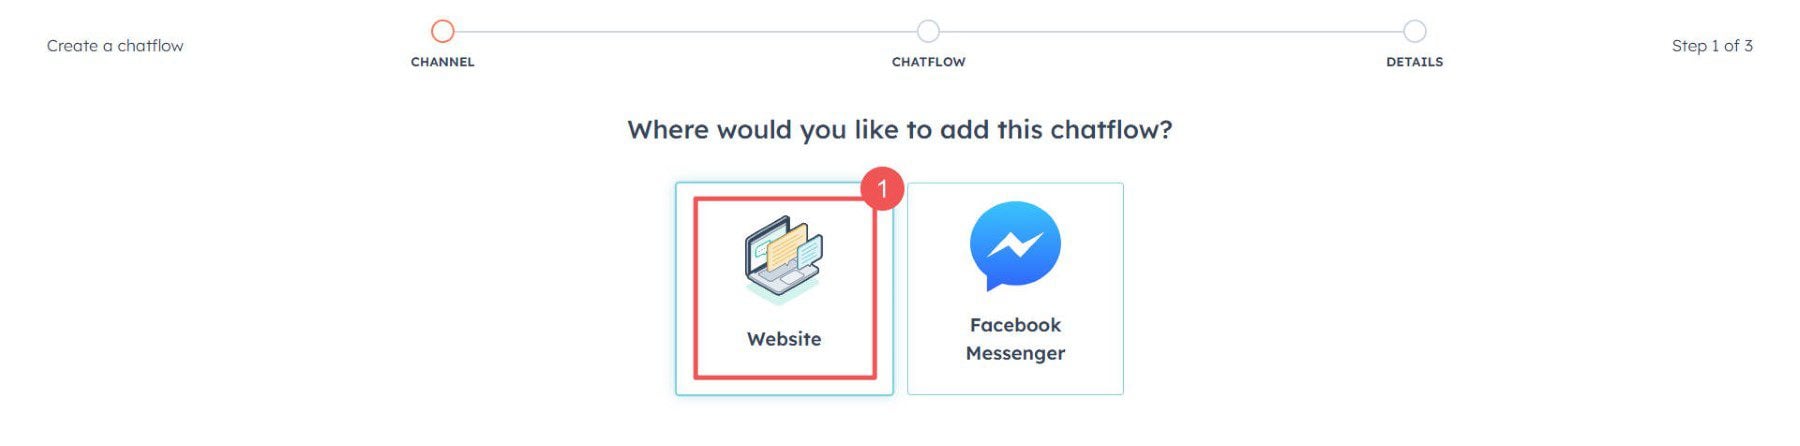 Create Chatbot - Steps 3